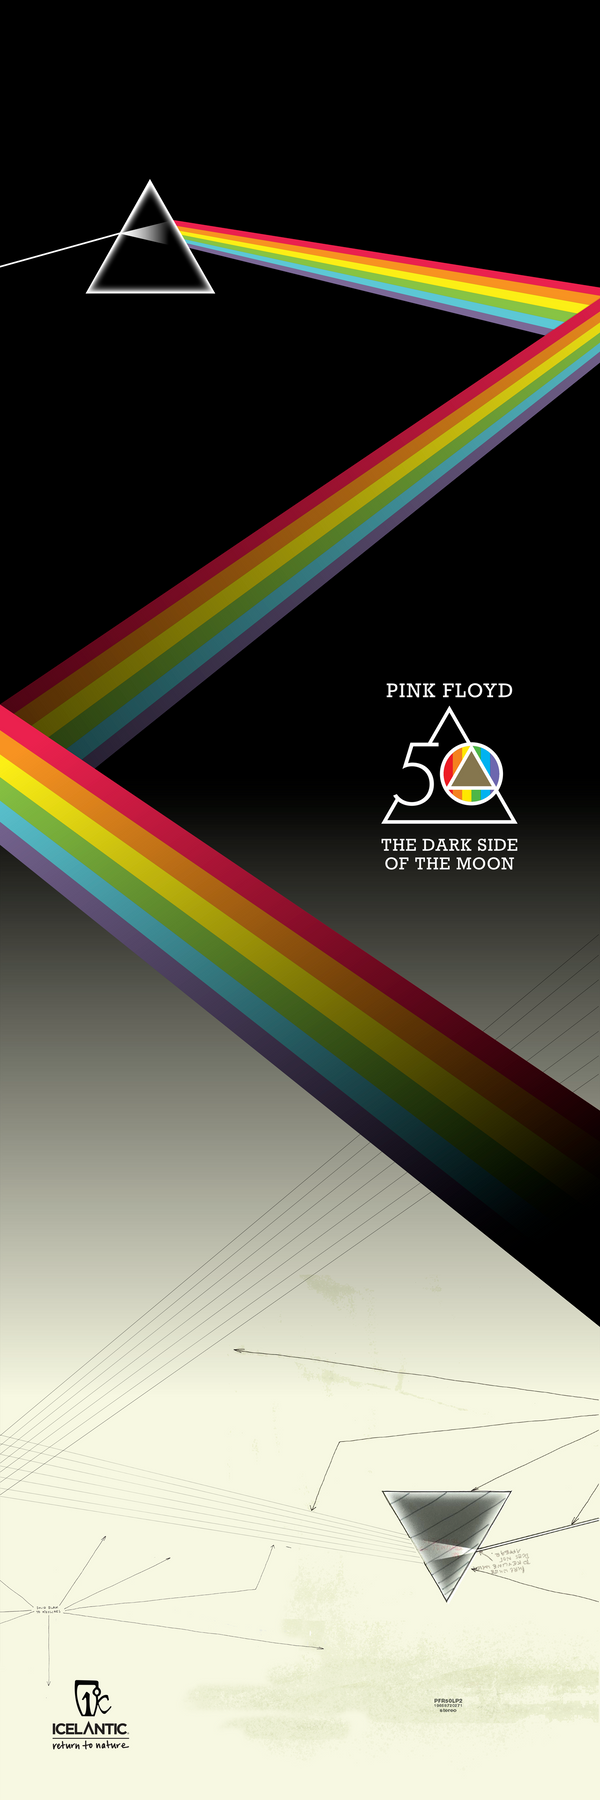 Limited Edition Pink Floyd X Icelantic Collab